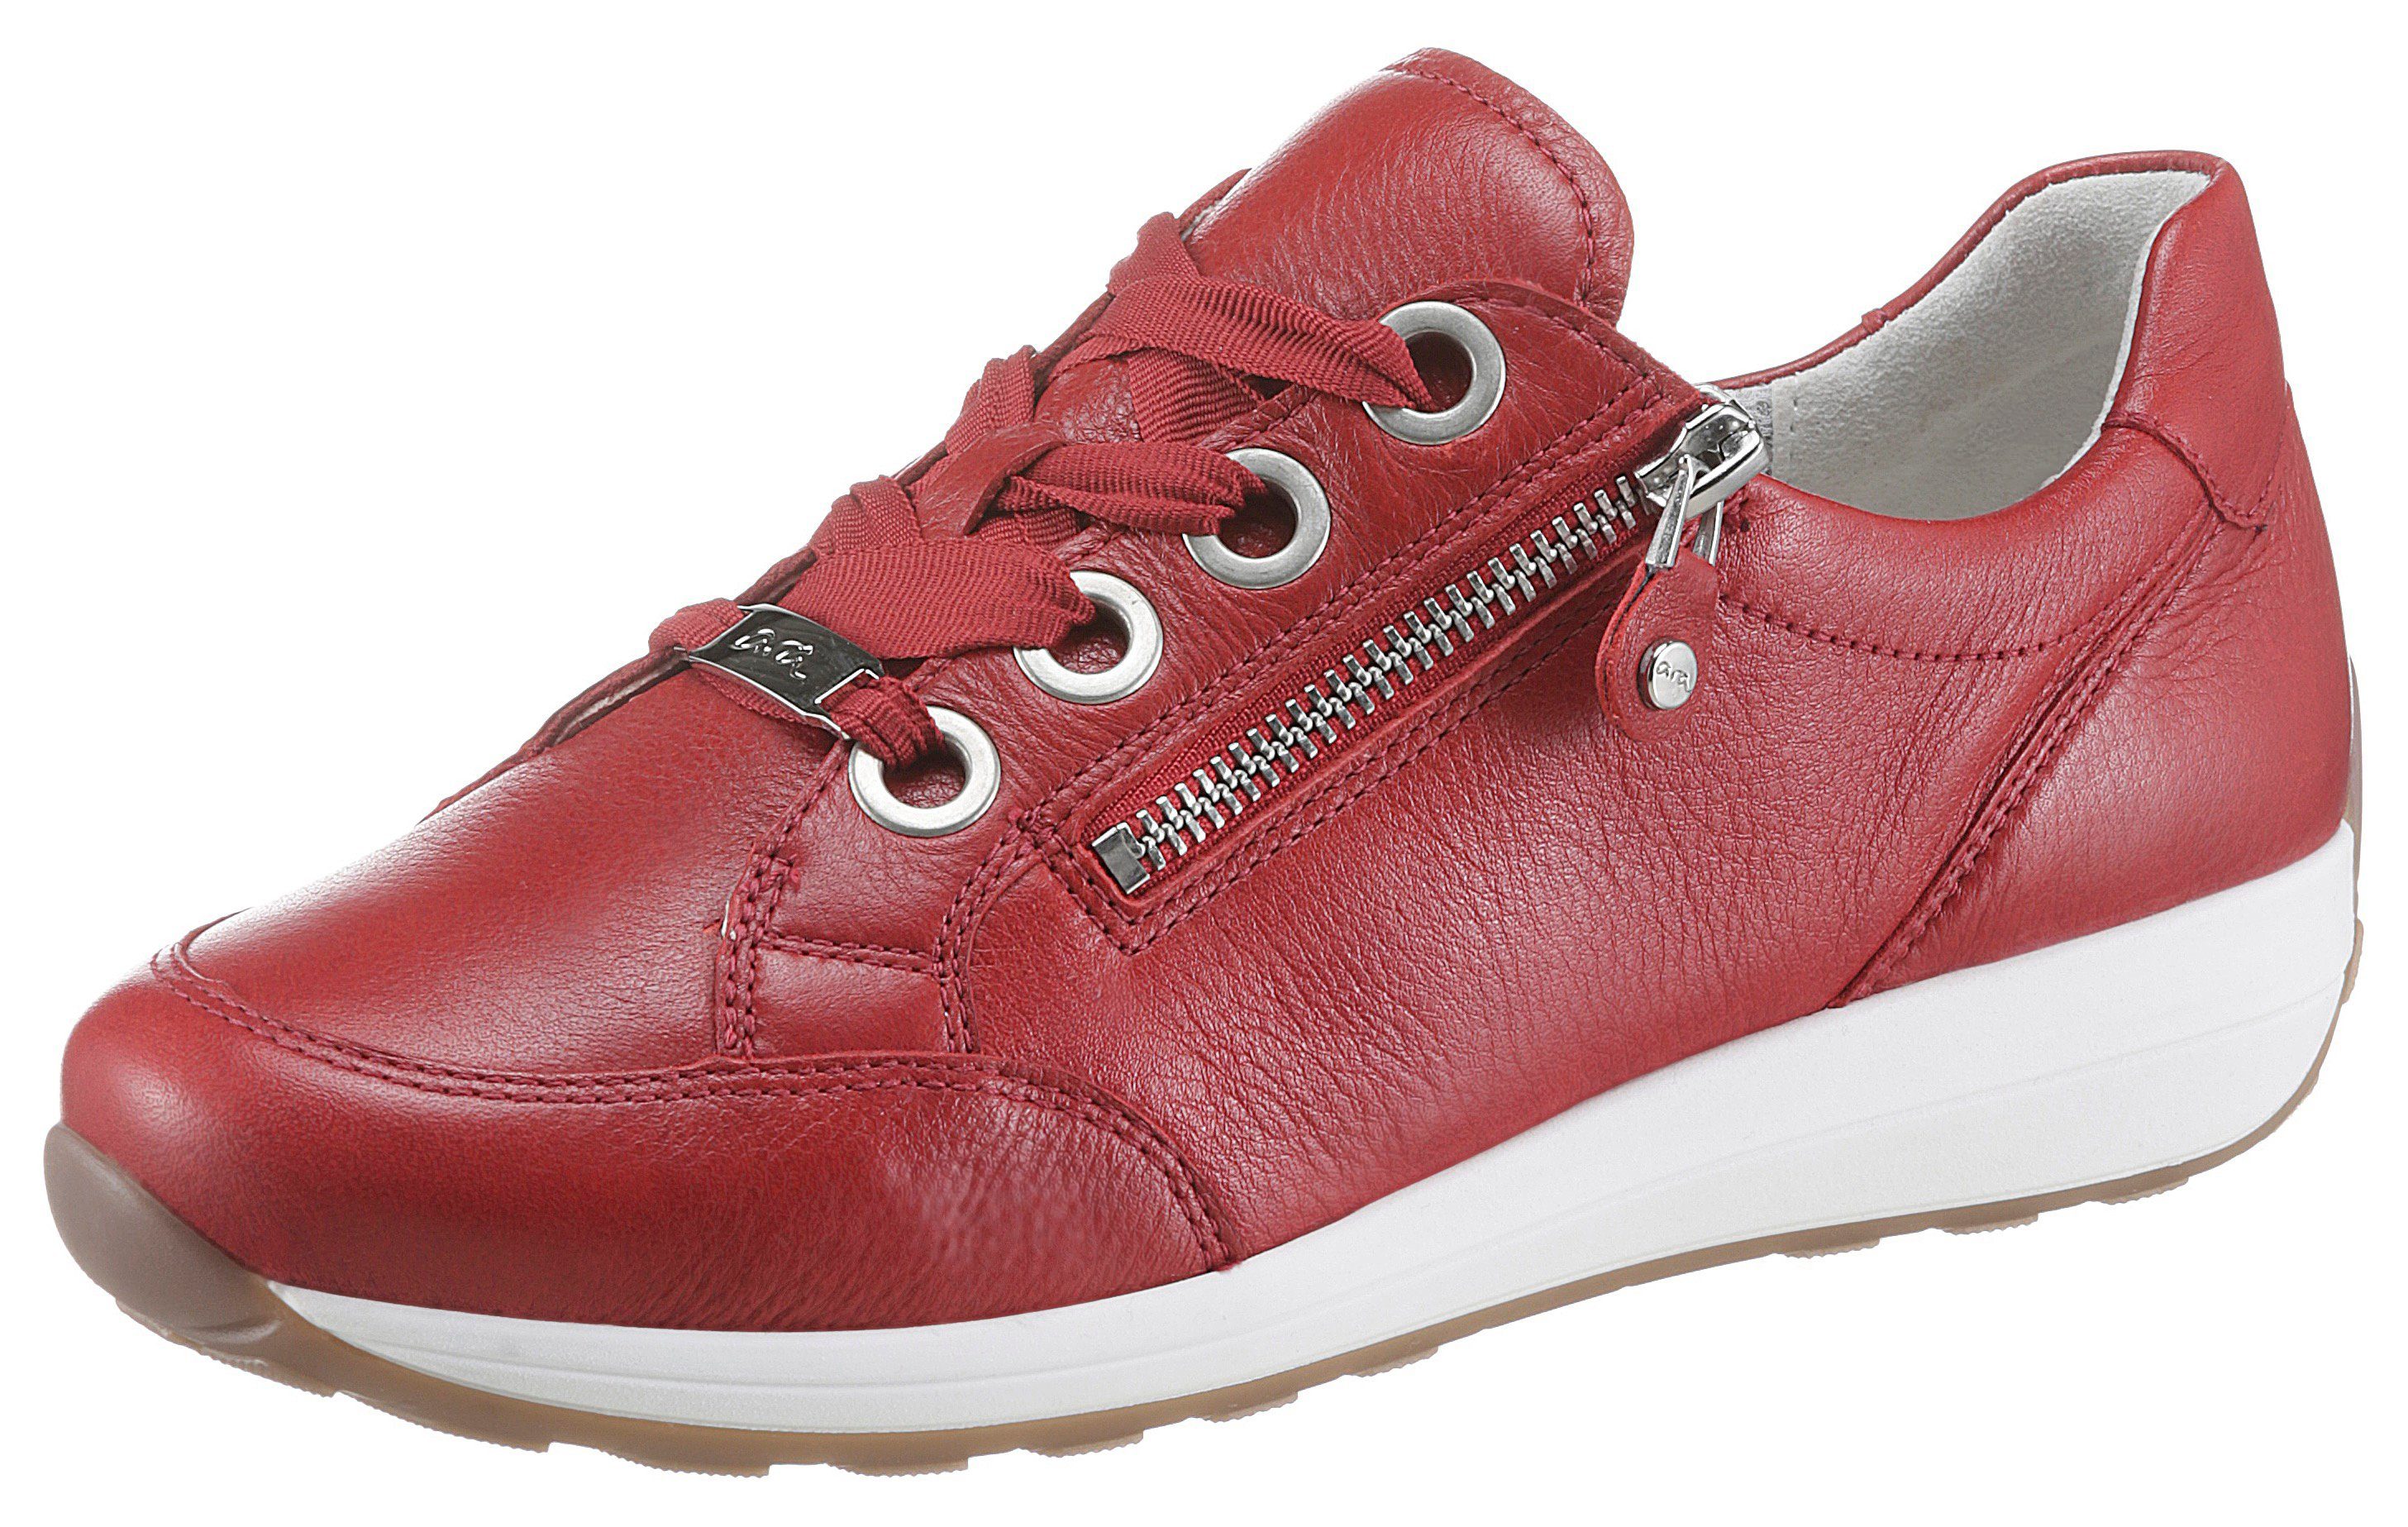 Ara OSAKA Sneaker in bequemer Schuhweite G rot